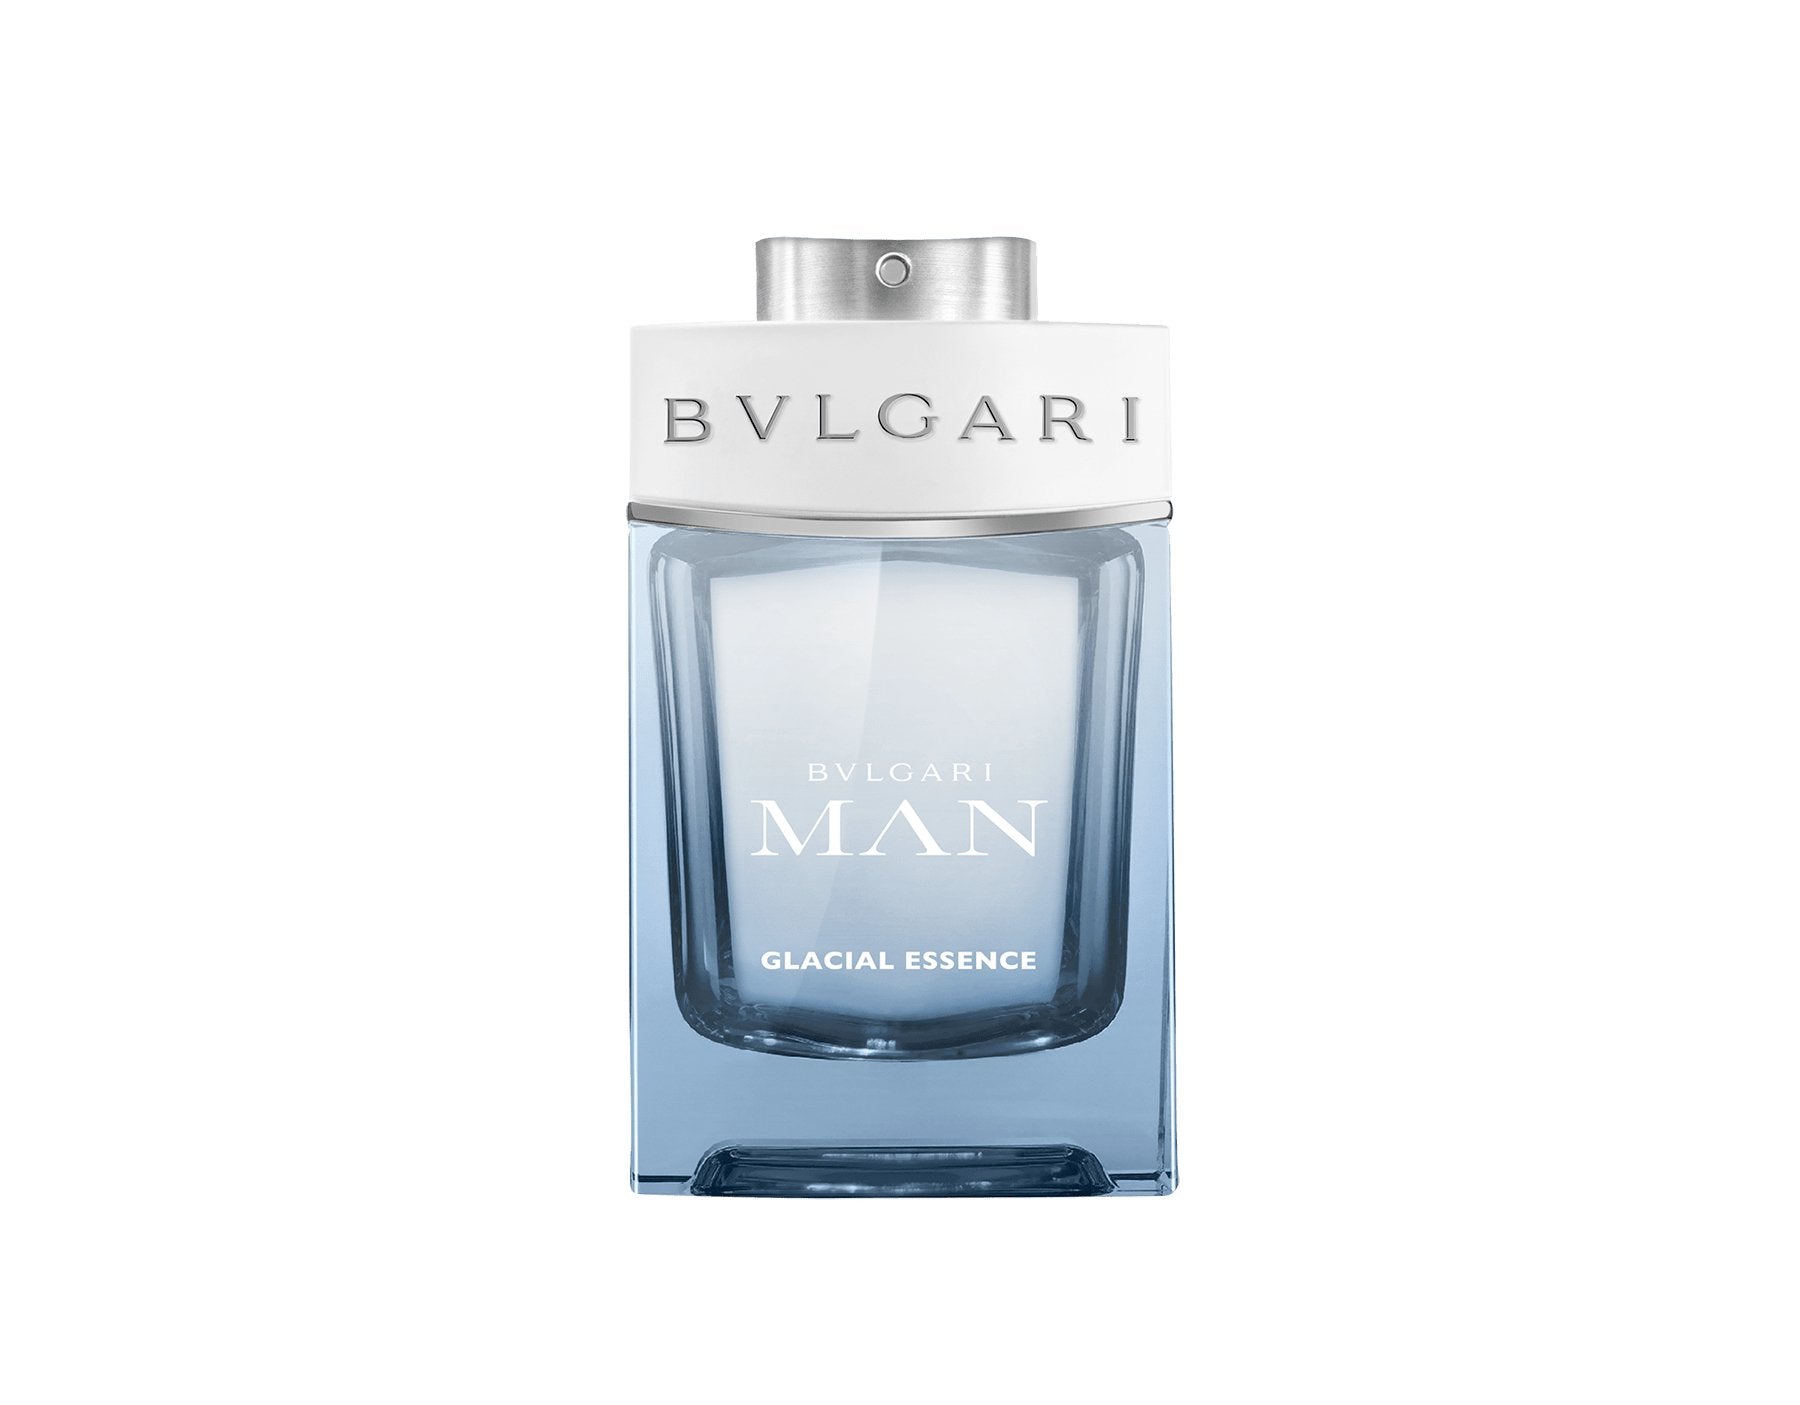 Bvlgari Man Glacial Essence Eau De Parfum Spray 60ml - LookincredibleBvlgari783320411953